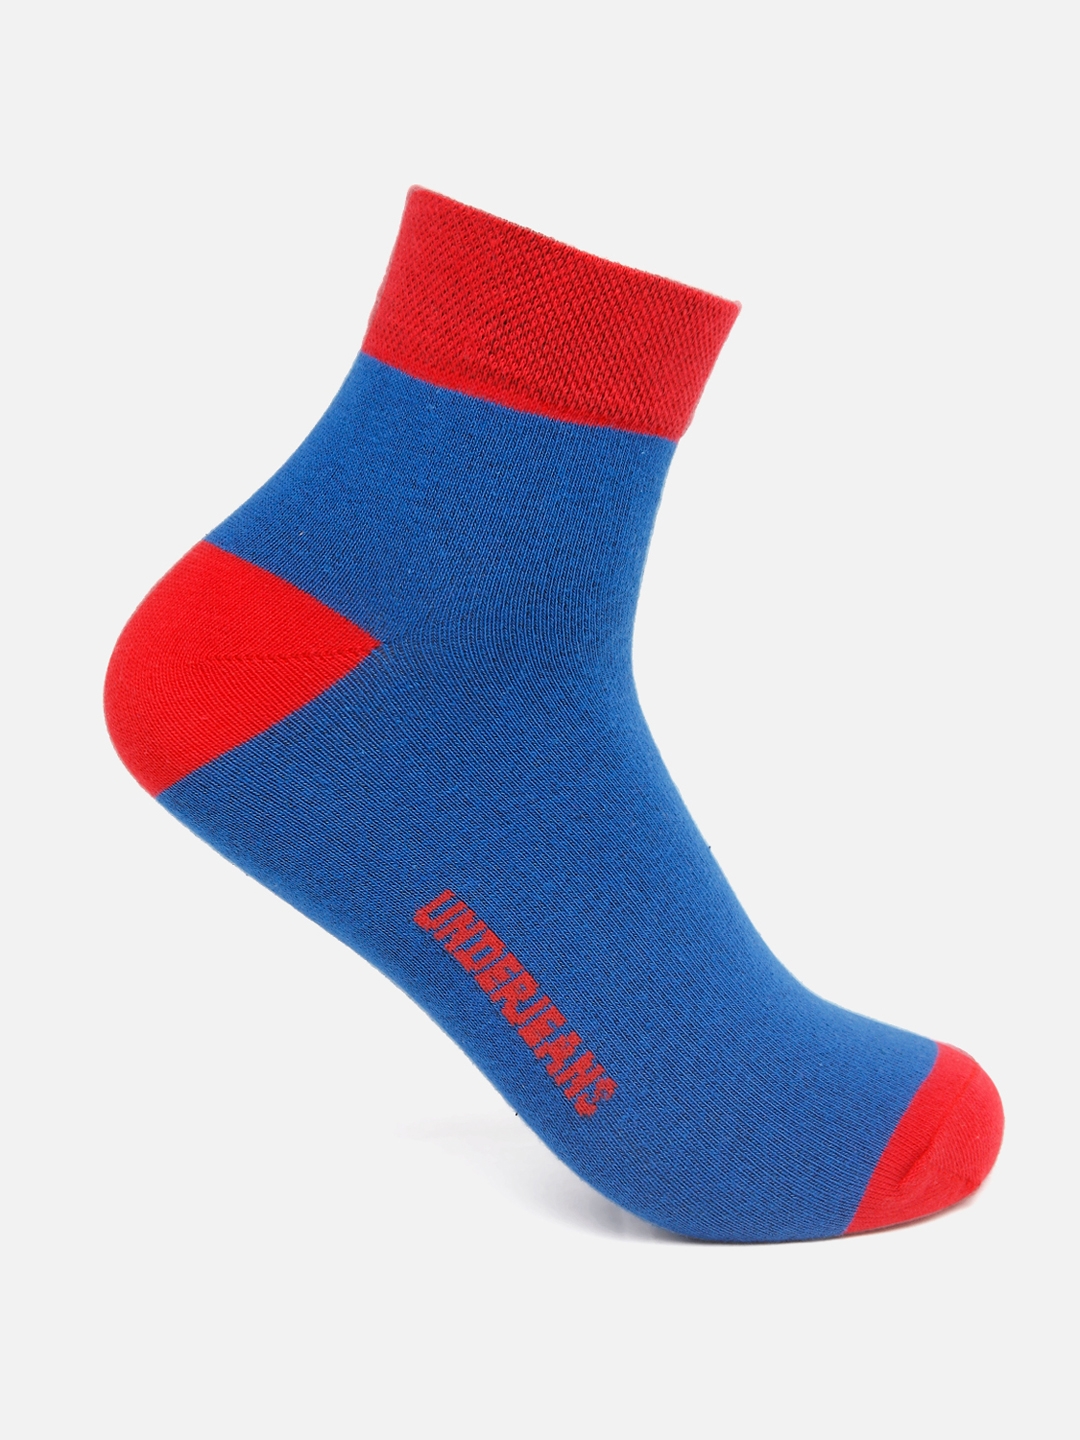 Spykar | Underjeans by Spykar Men Blue/Red Ankle Length (Non Terry) Single Pair of Socks